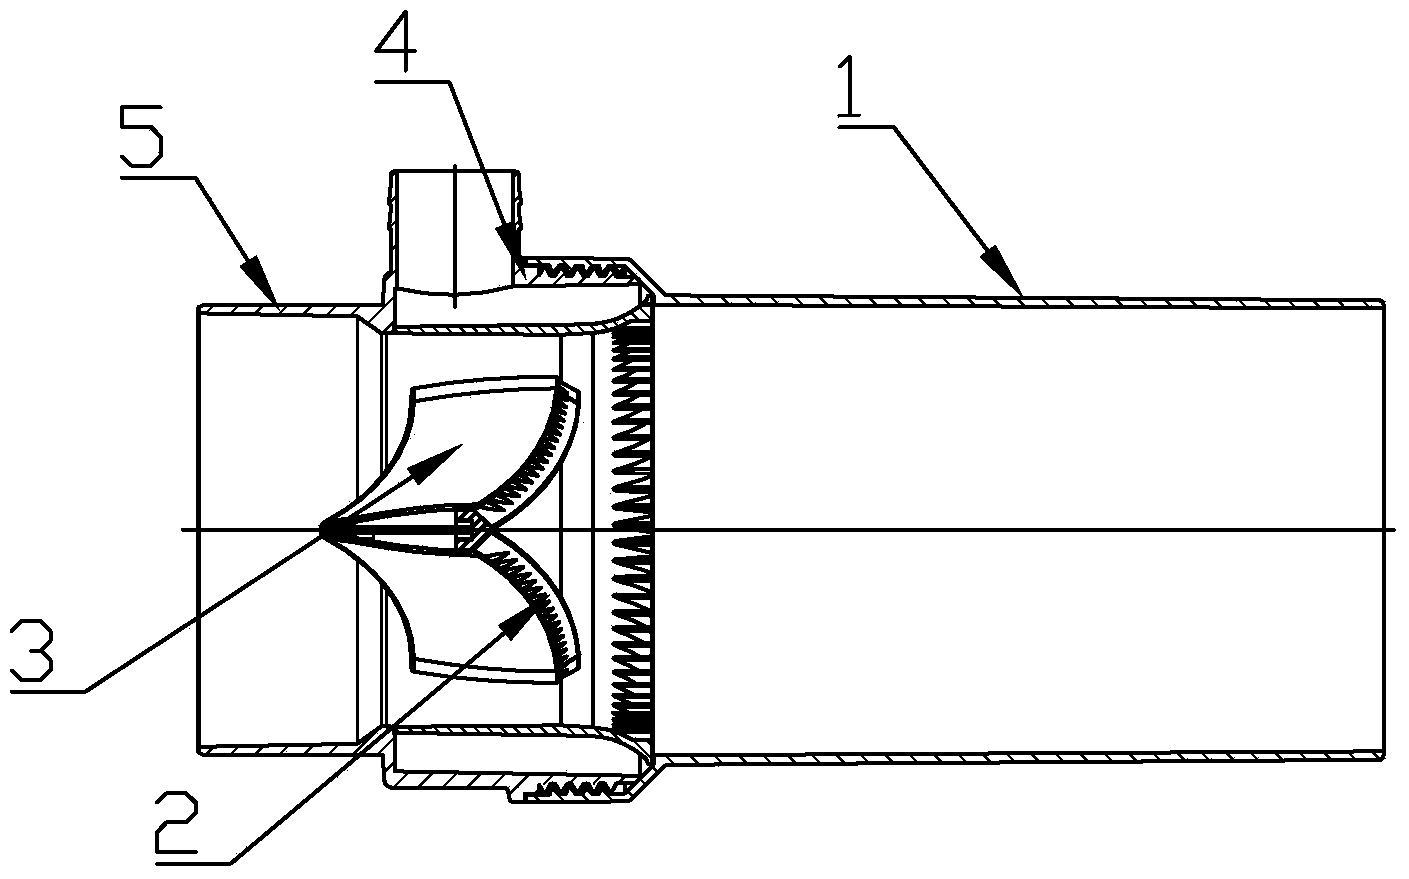 Jet array-type aeration device